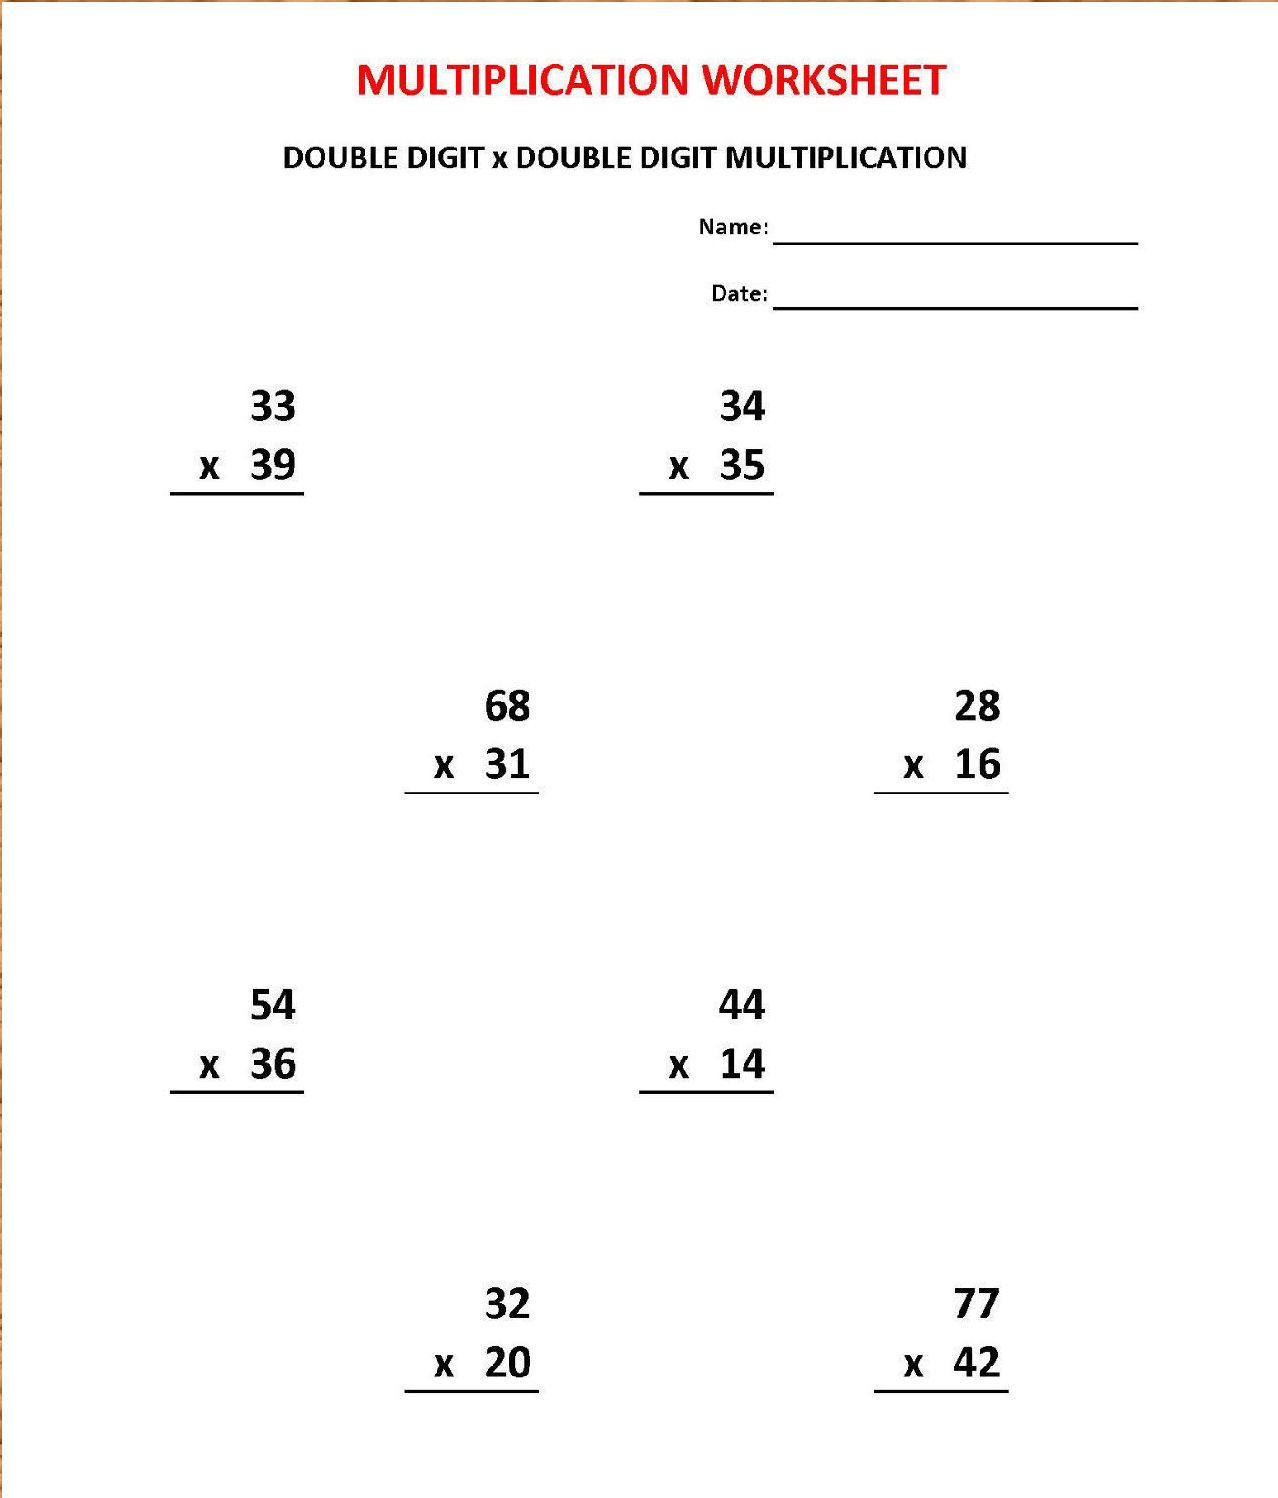 multiplication-double-digit-worksheet-multiplication-worksheets